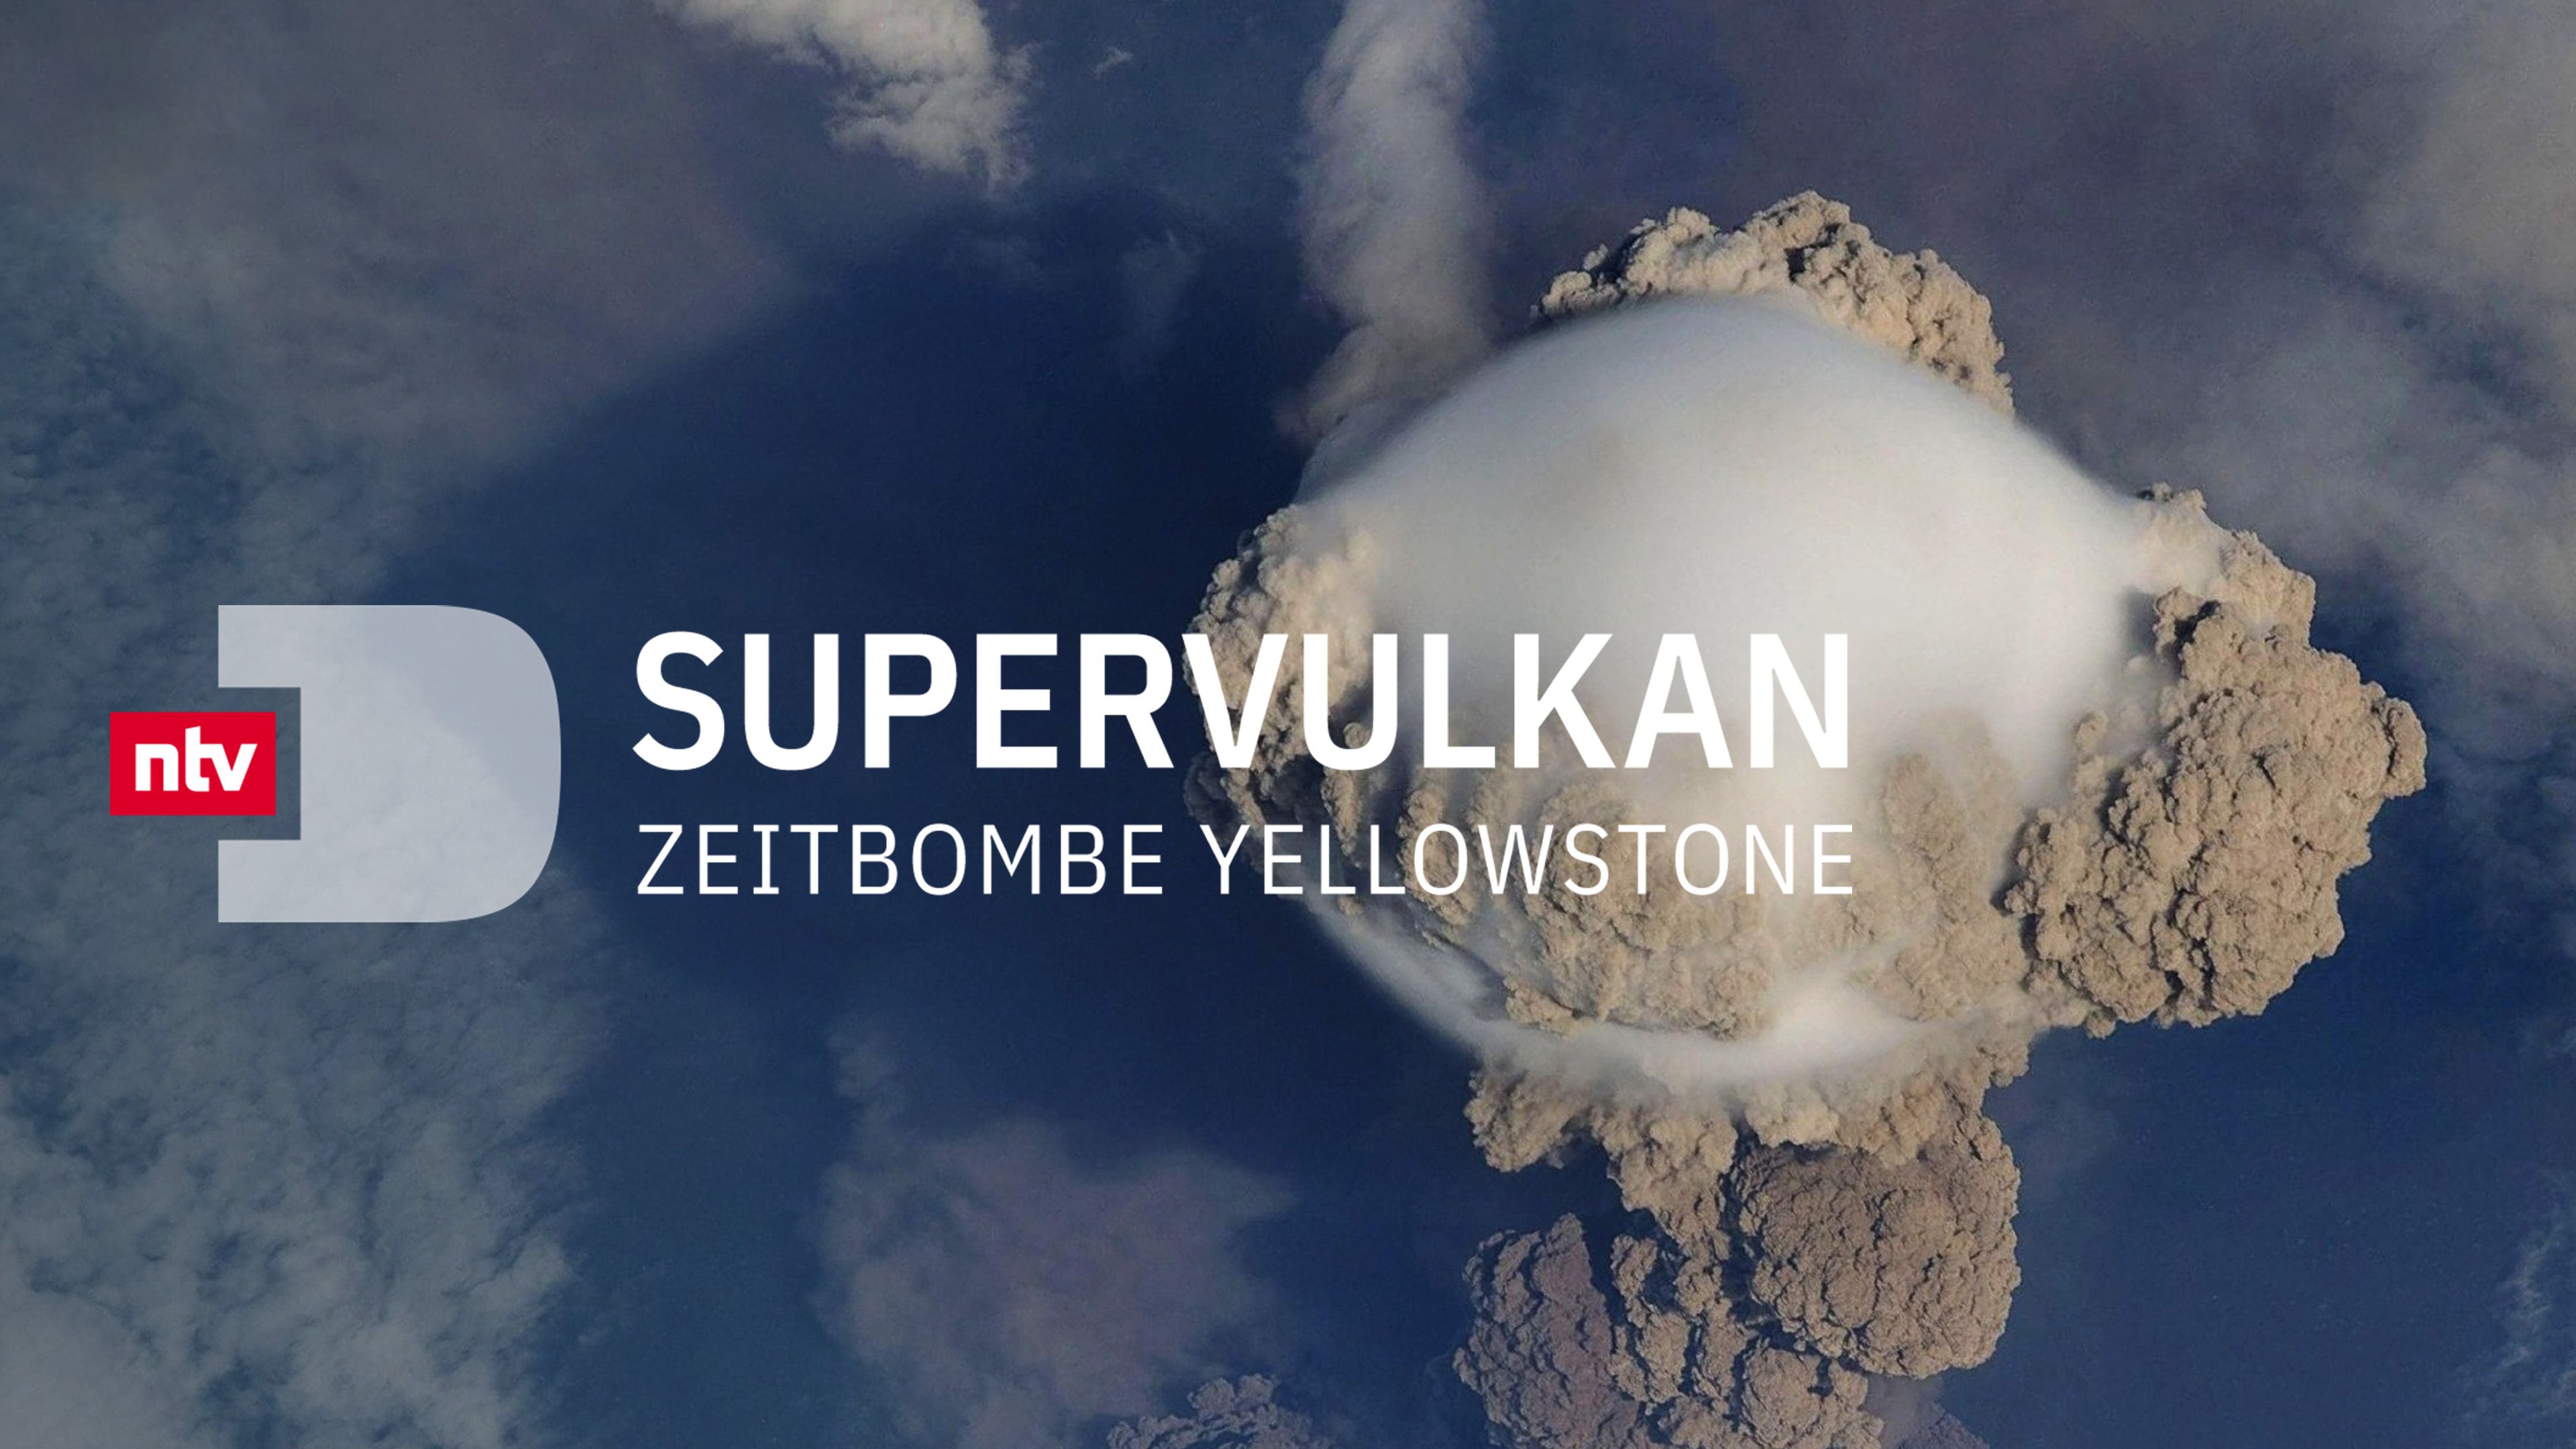 Der Supervulkan - Zeitbombe Yellowstone